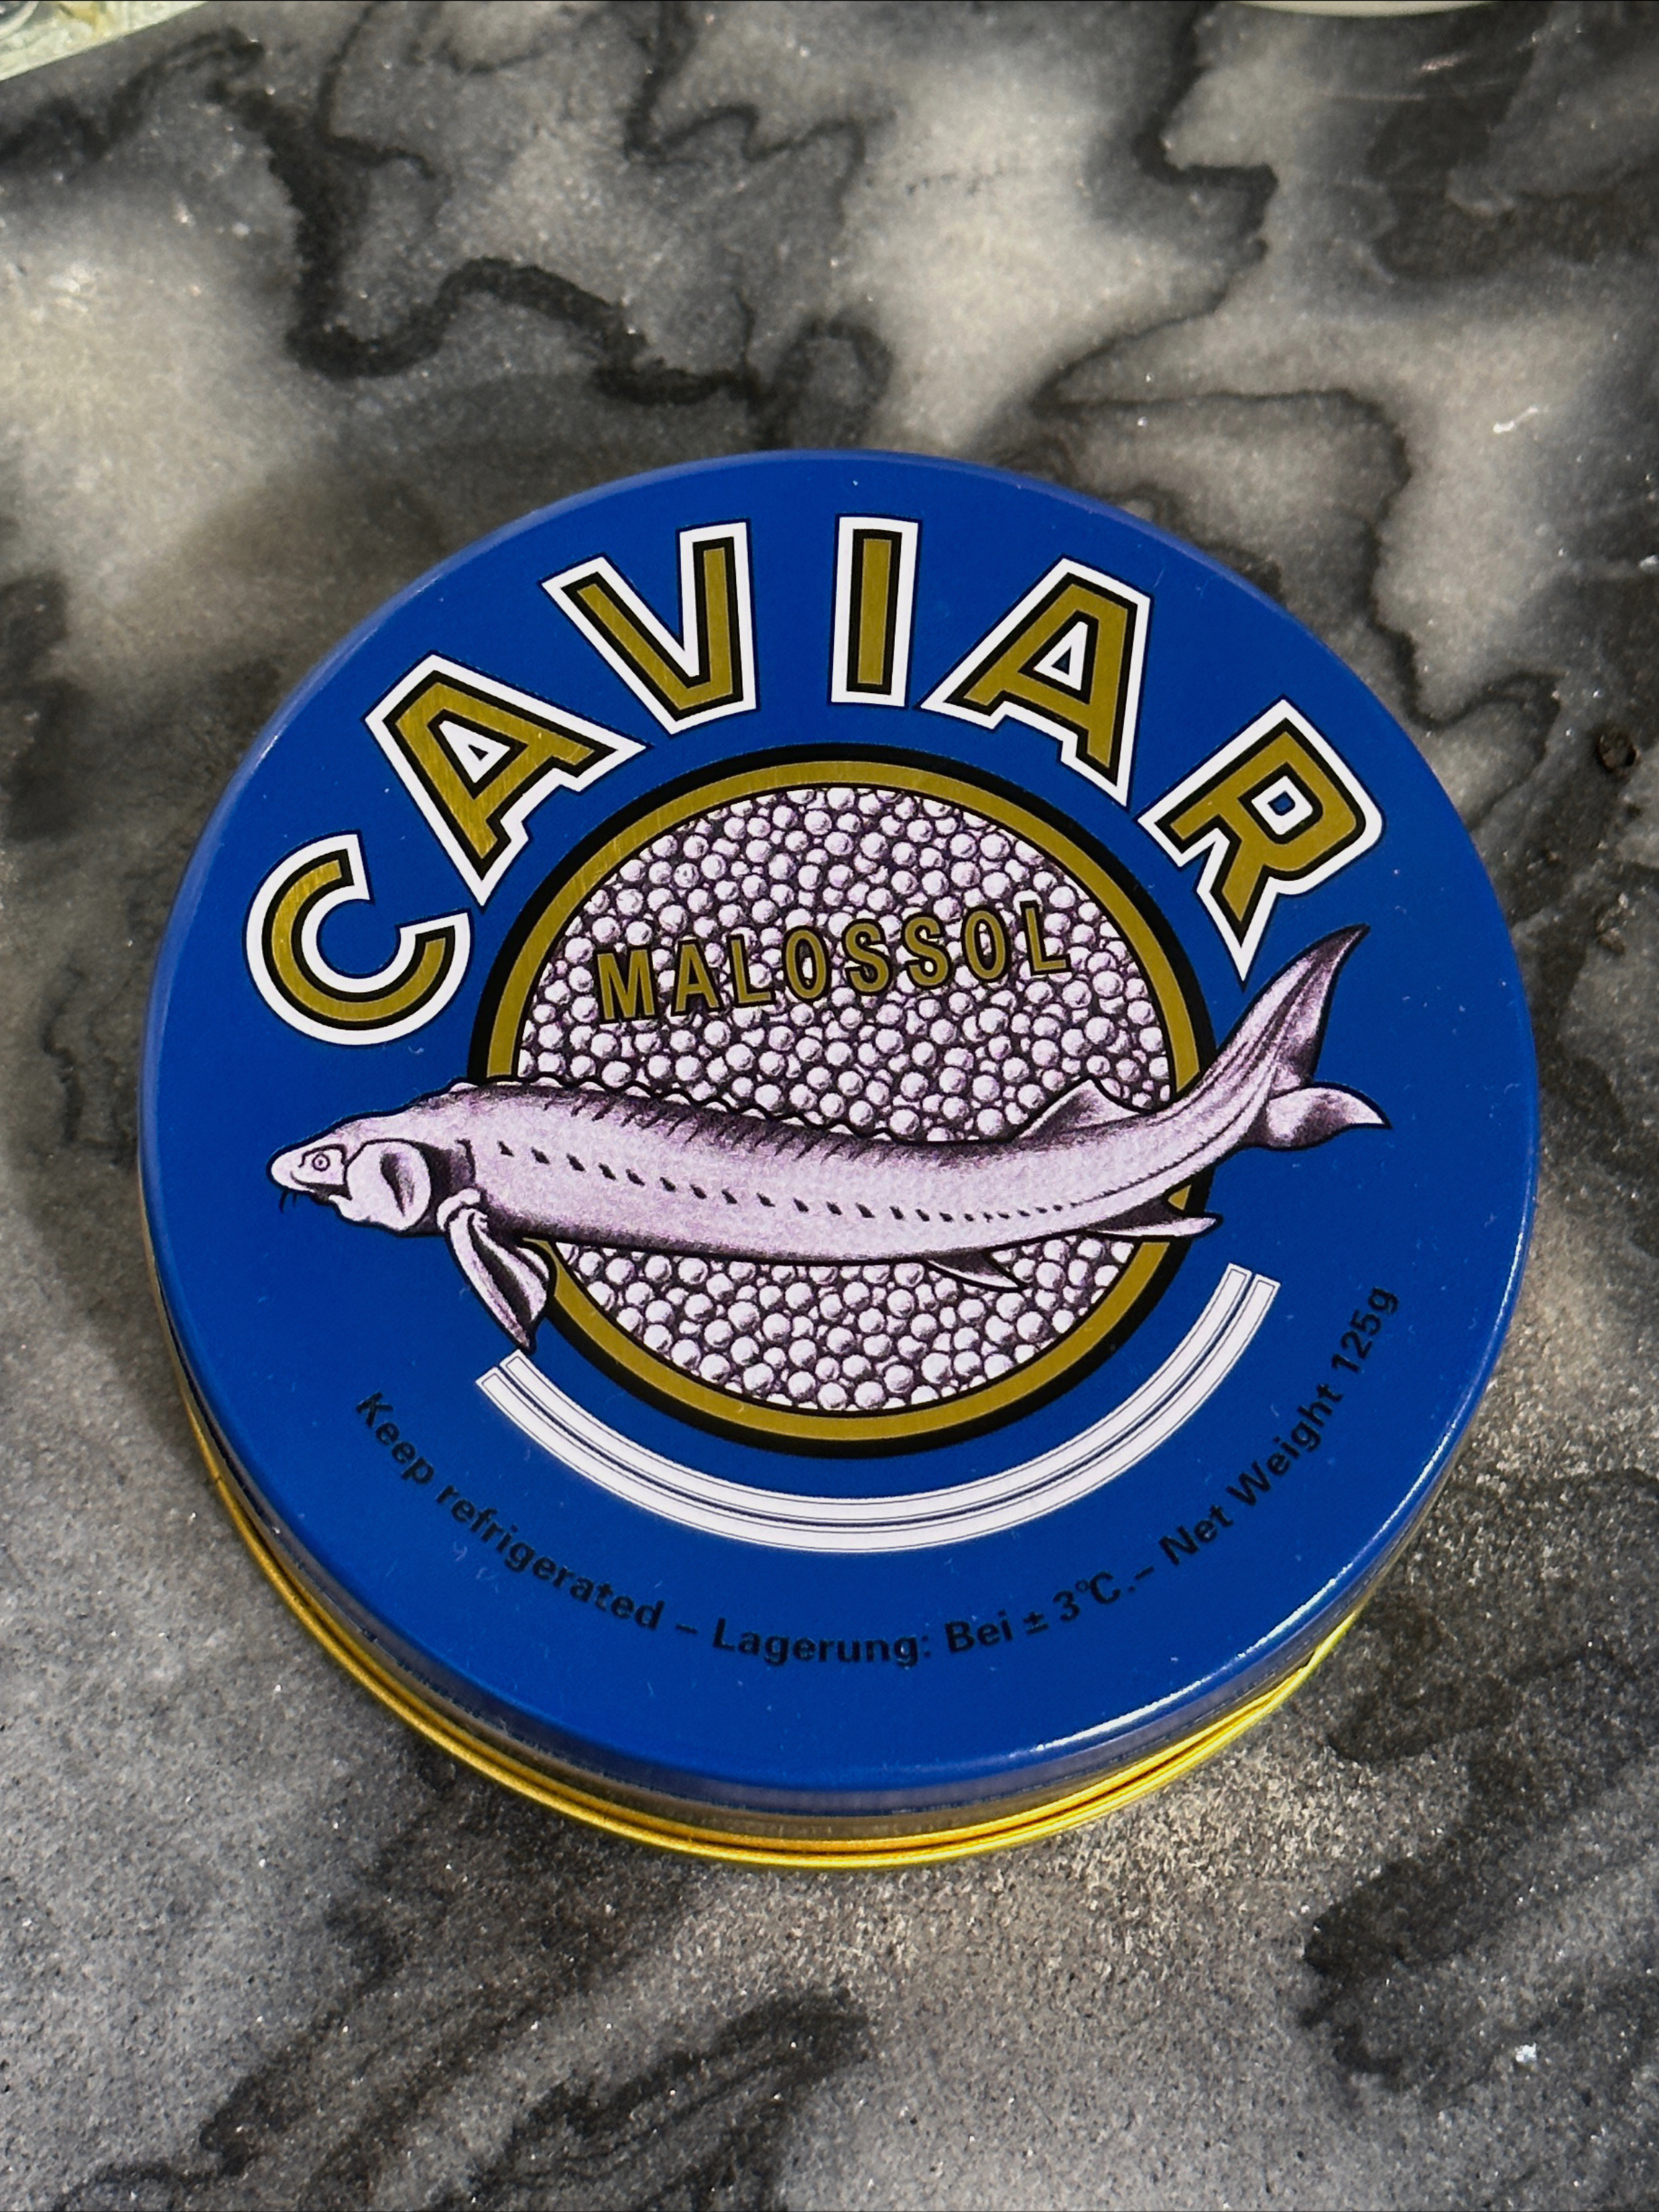 Caviar Match Striker